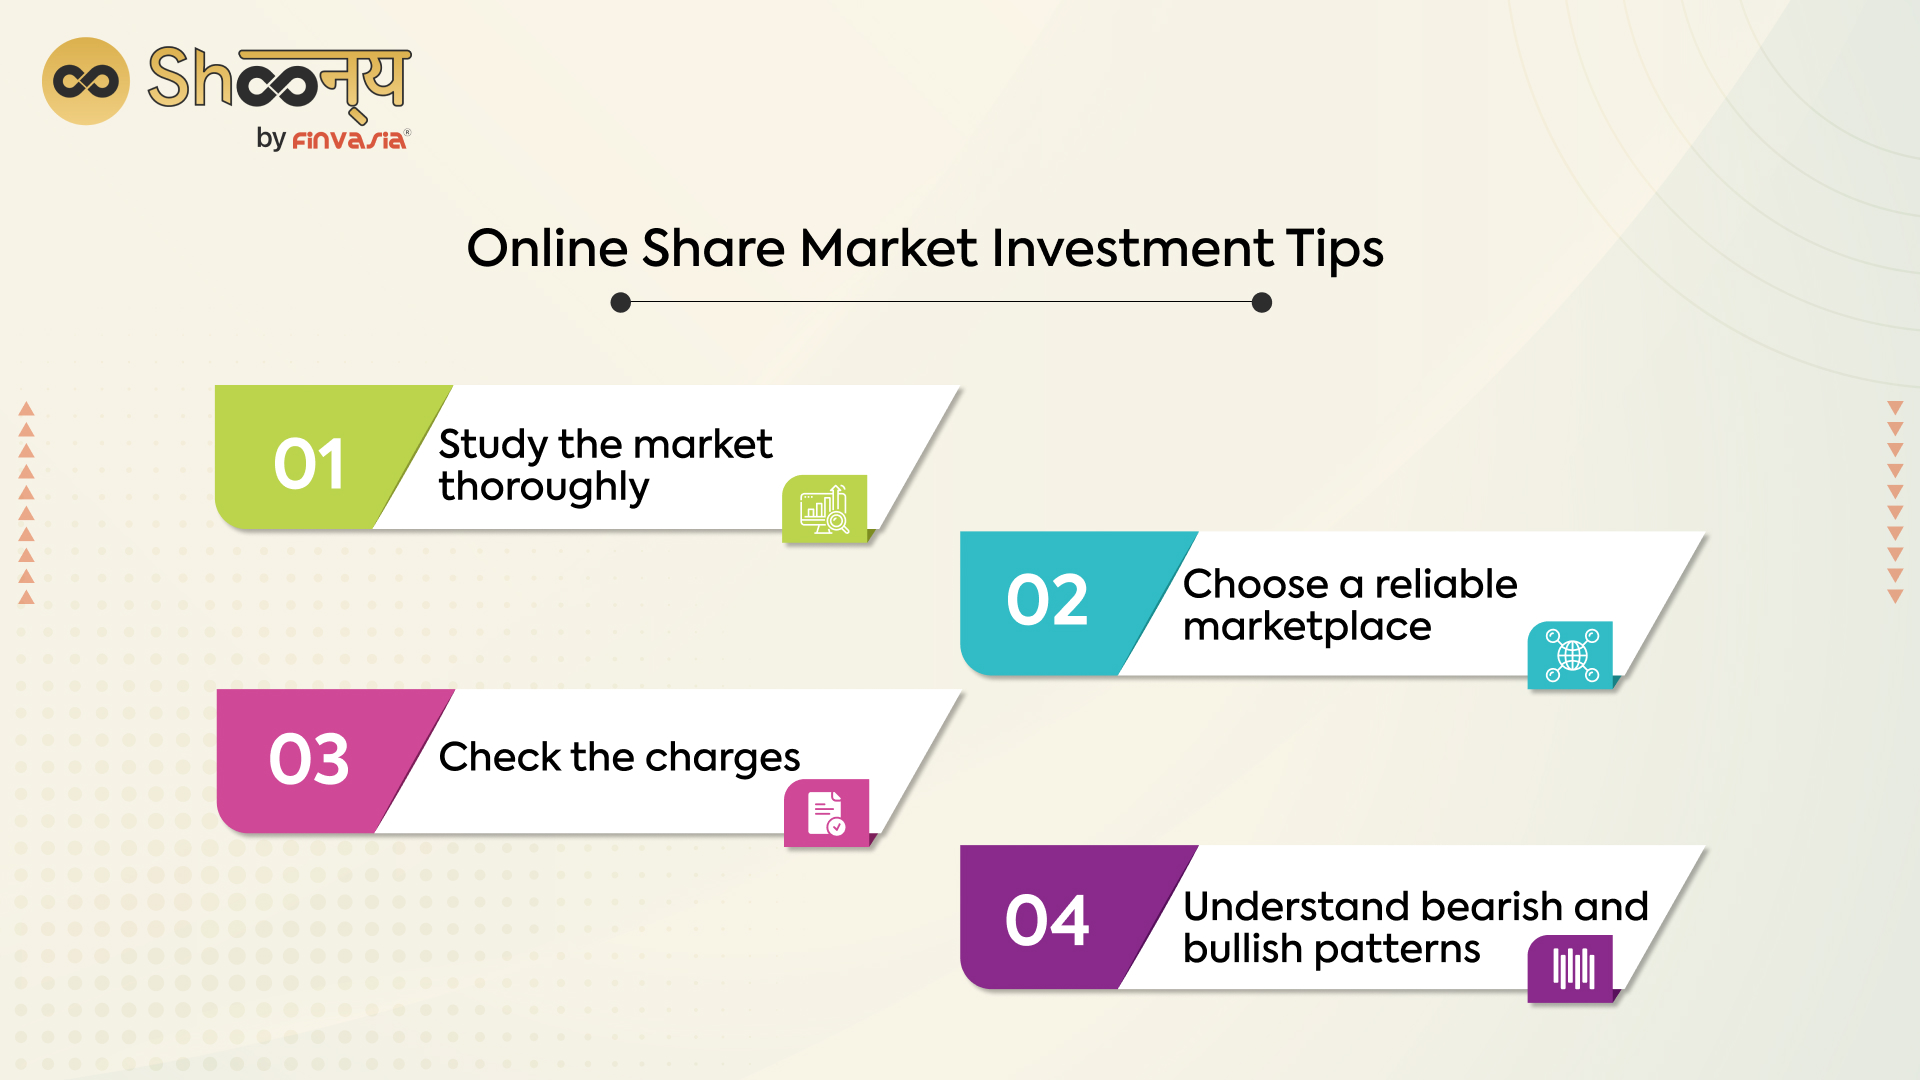 Online Share Market Investment Tips
